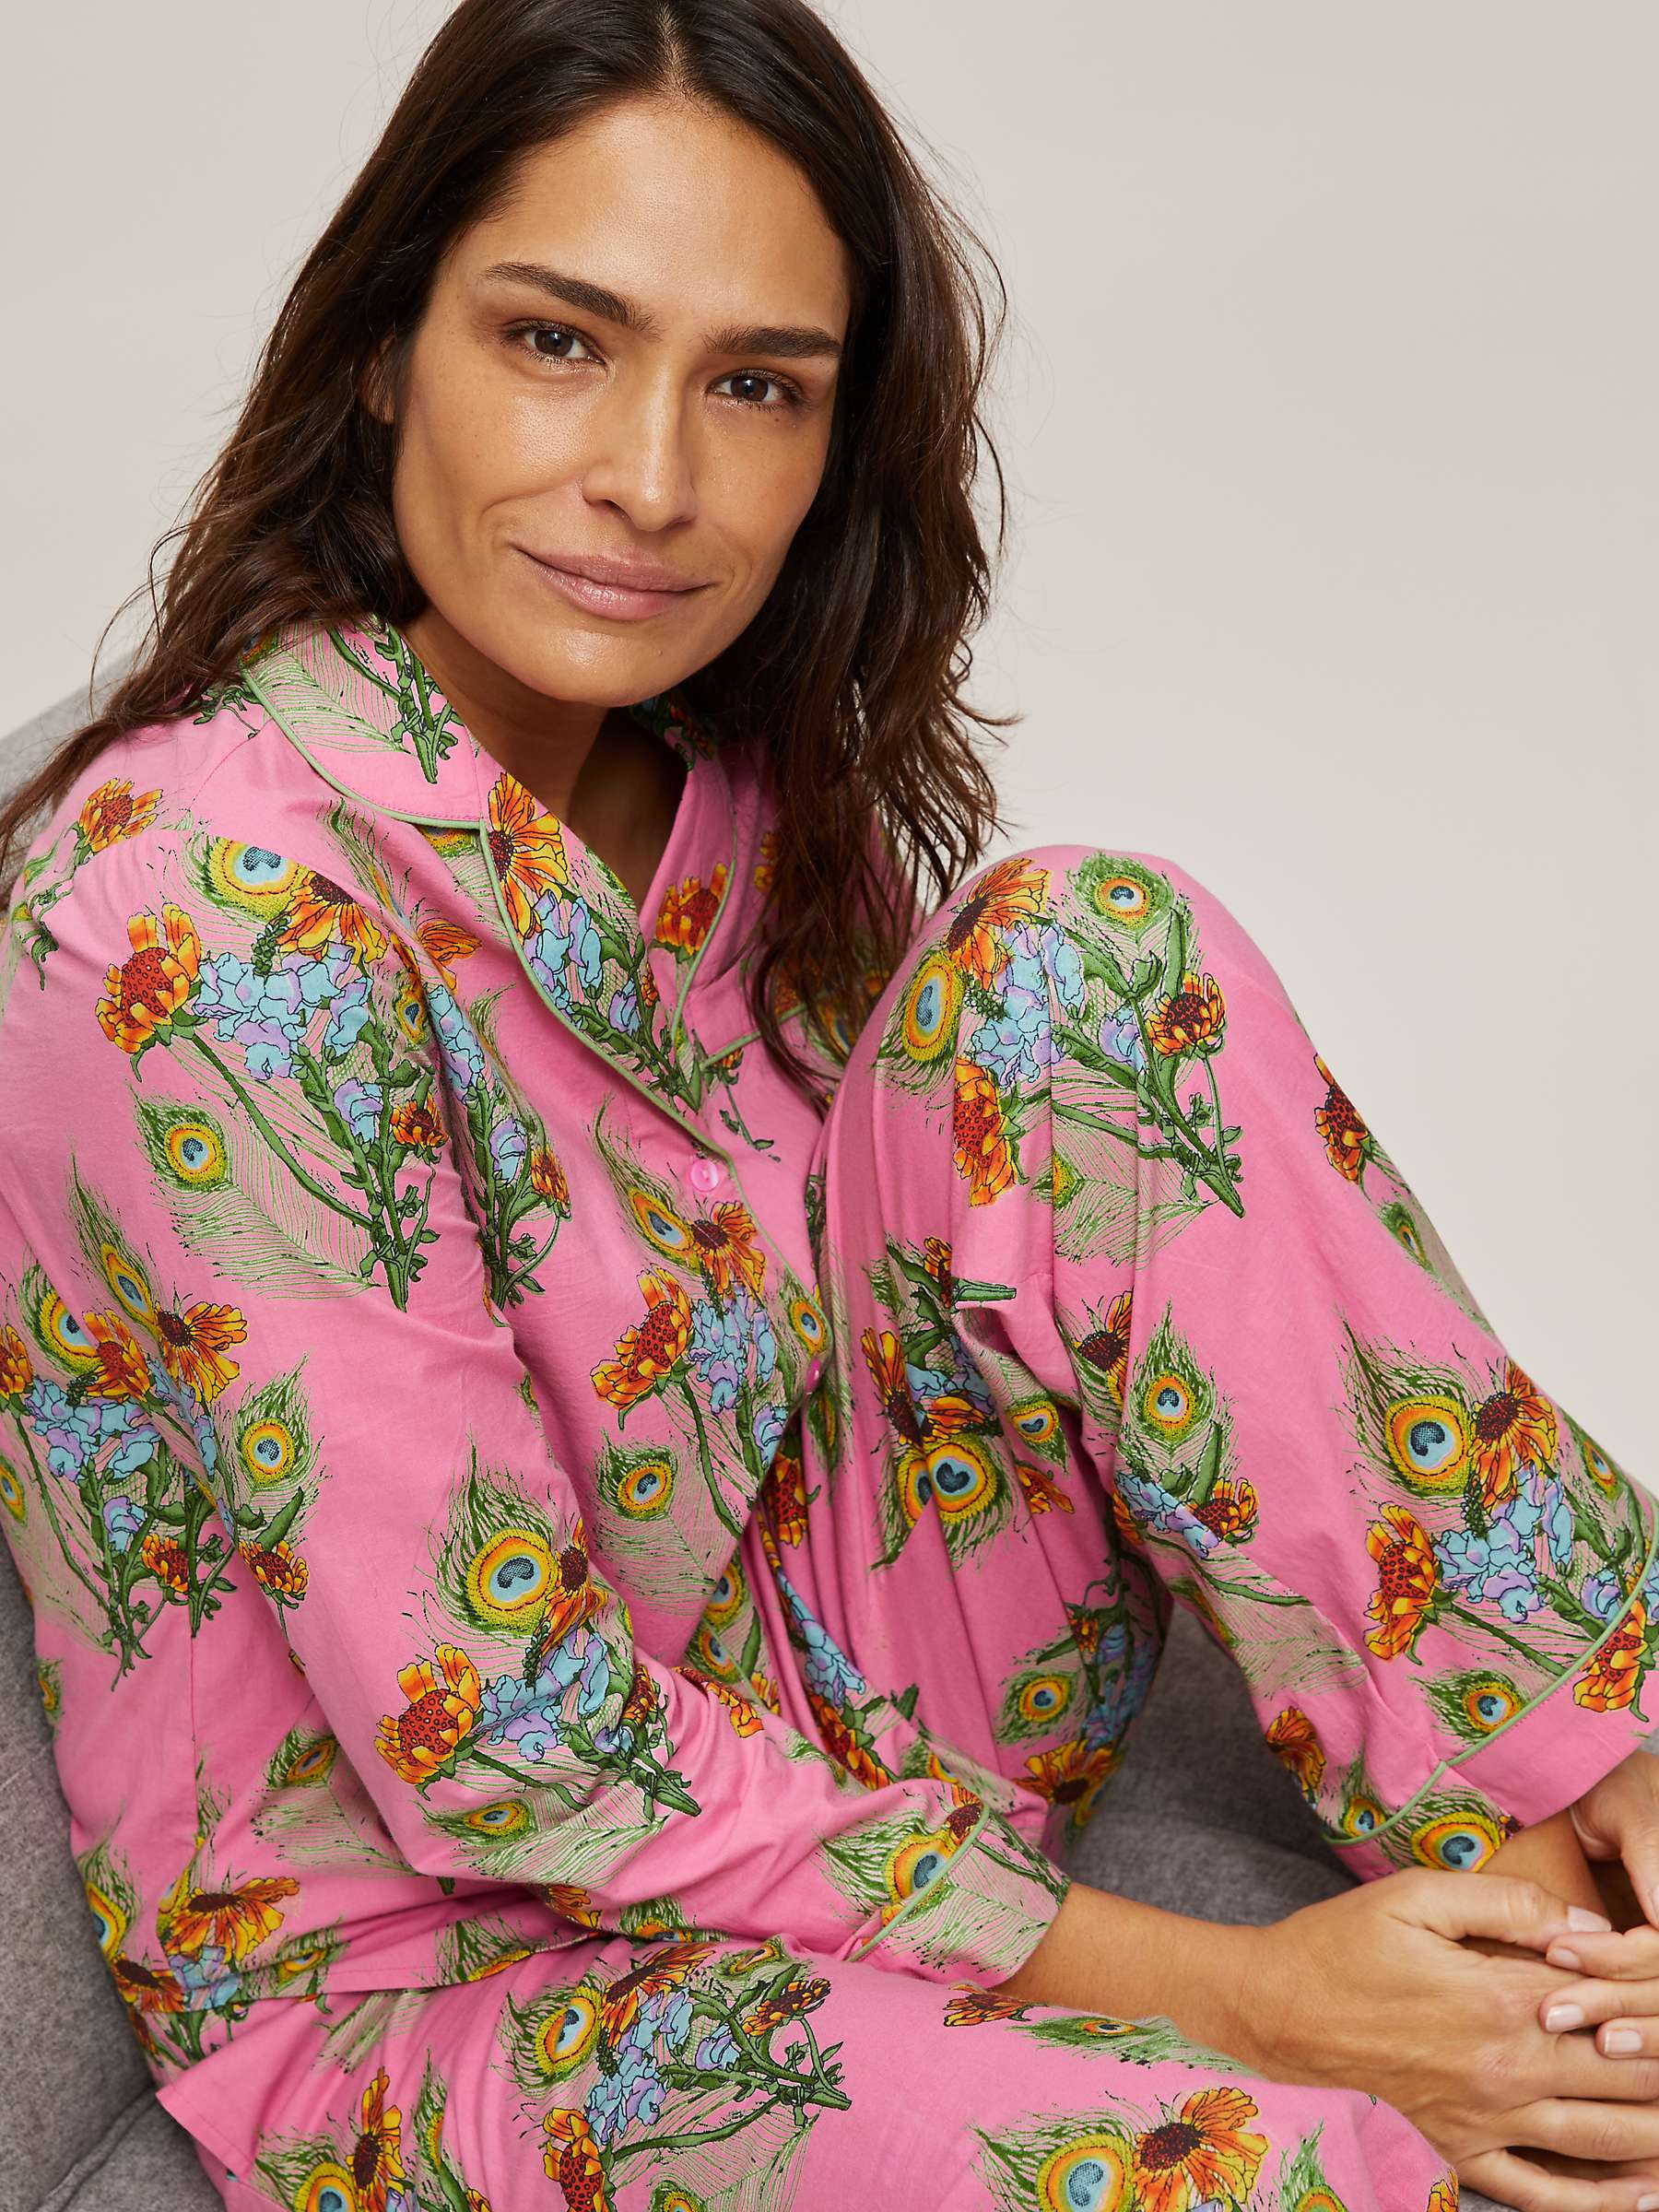 Buy Their Nibs Mardis Gras Bouquet Pyjama Set, Pink Online at johnlewis.com